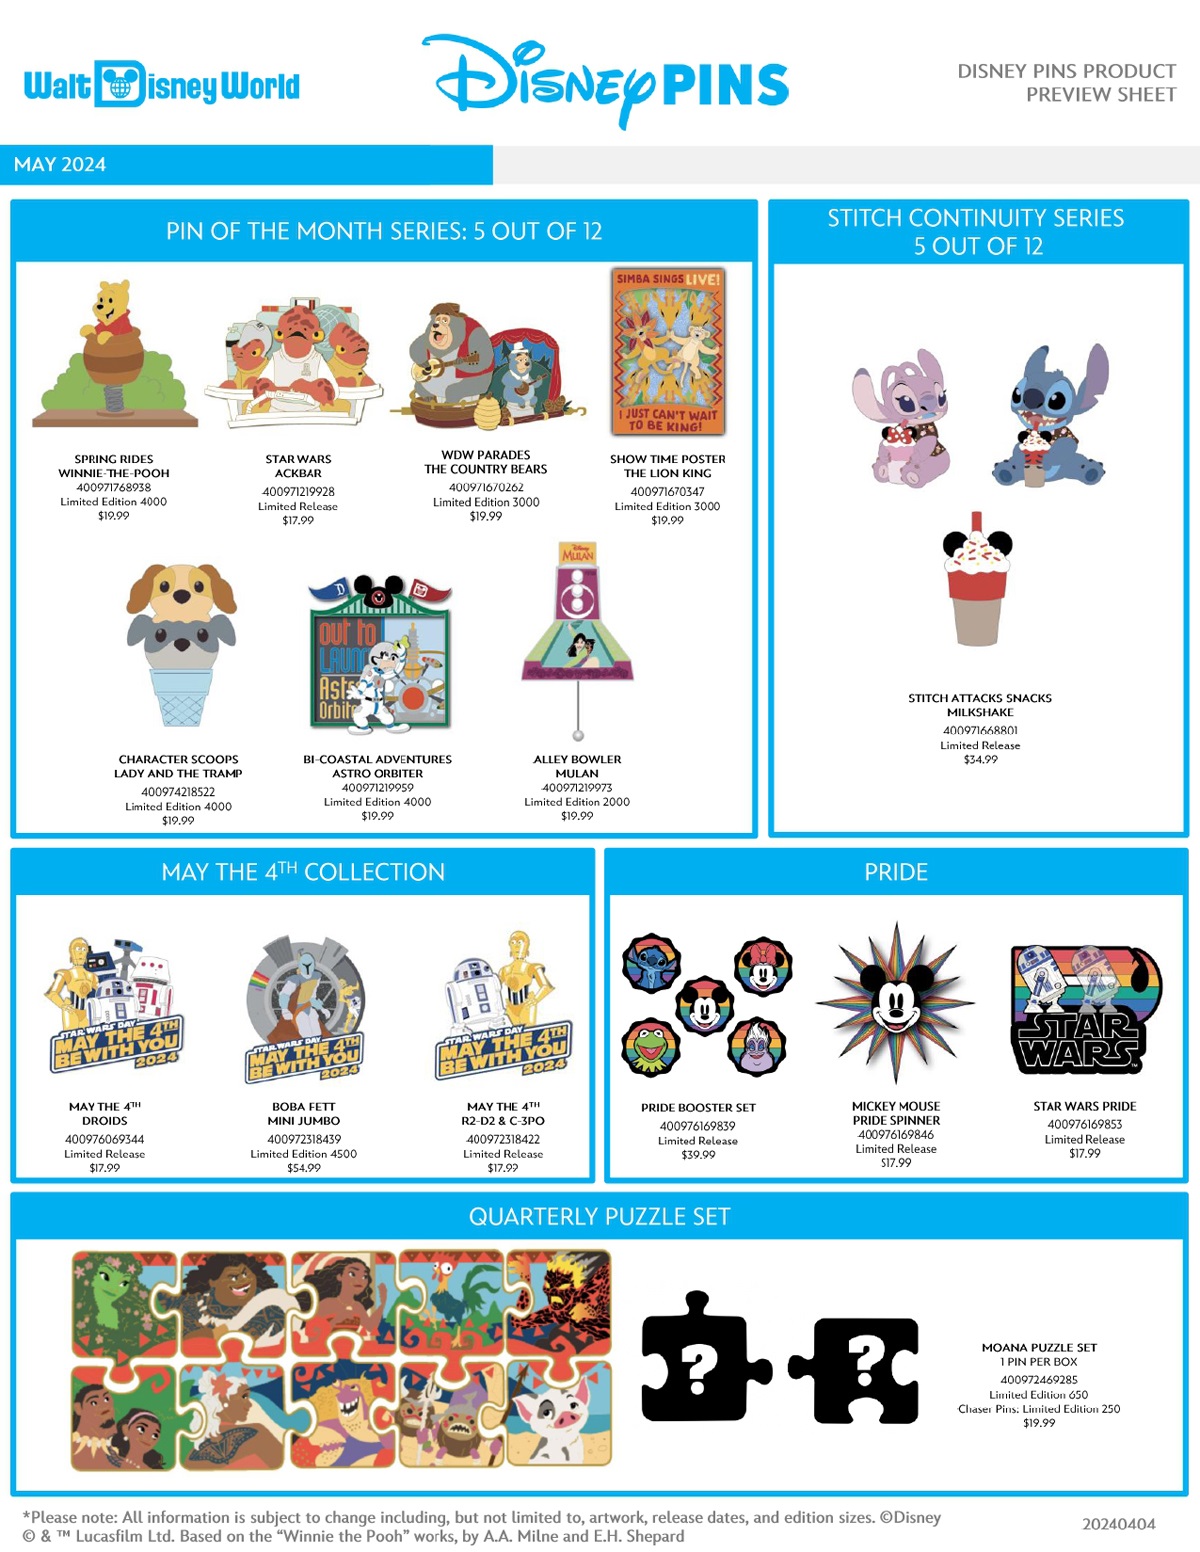 Walt Disney World Disney Pins Preview Sheet - May 2024 - Page 1